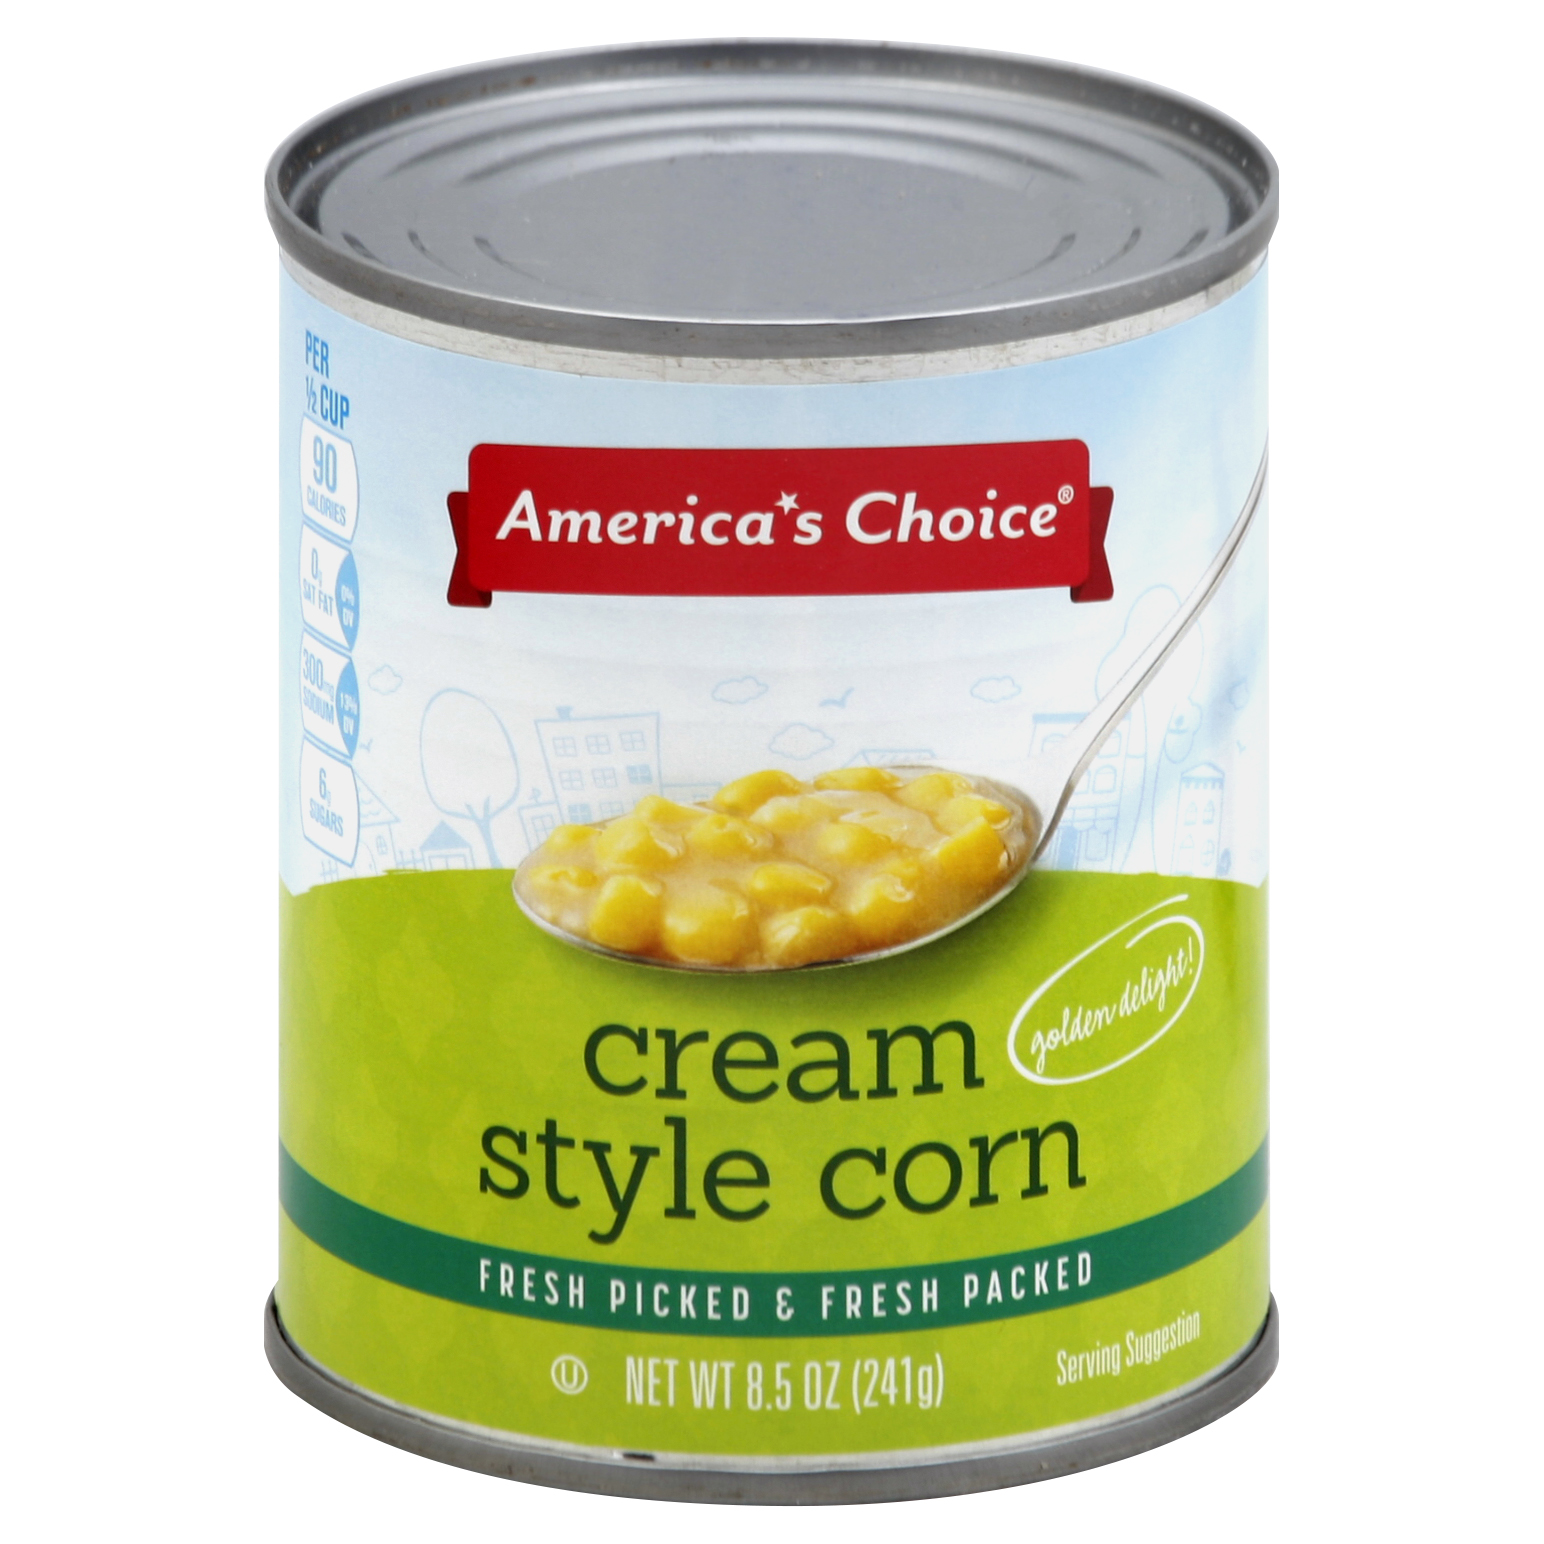 America's Choice Corn 8.5 Oz image